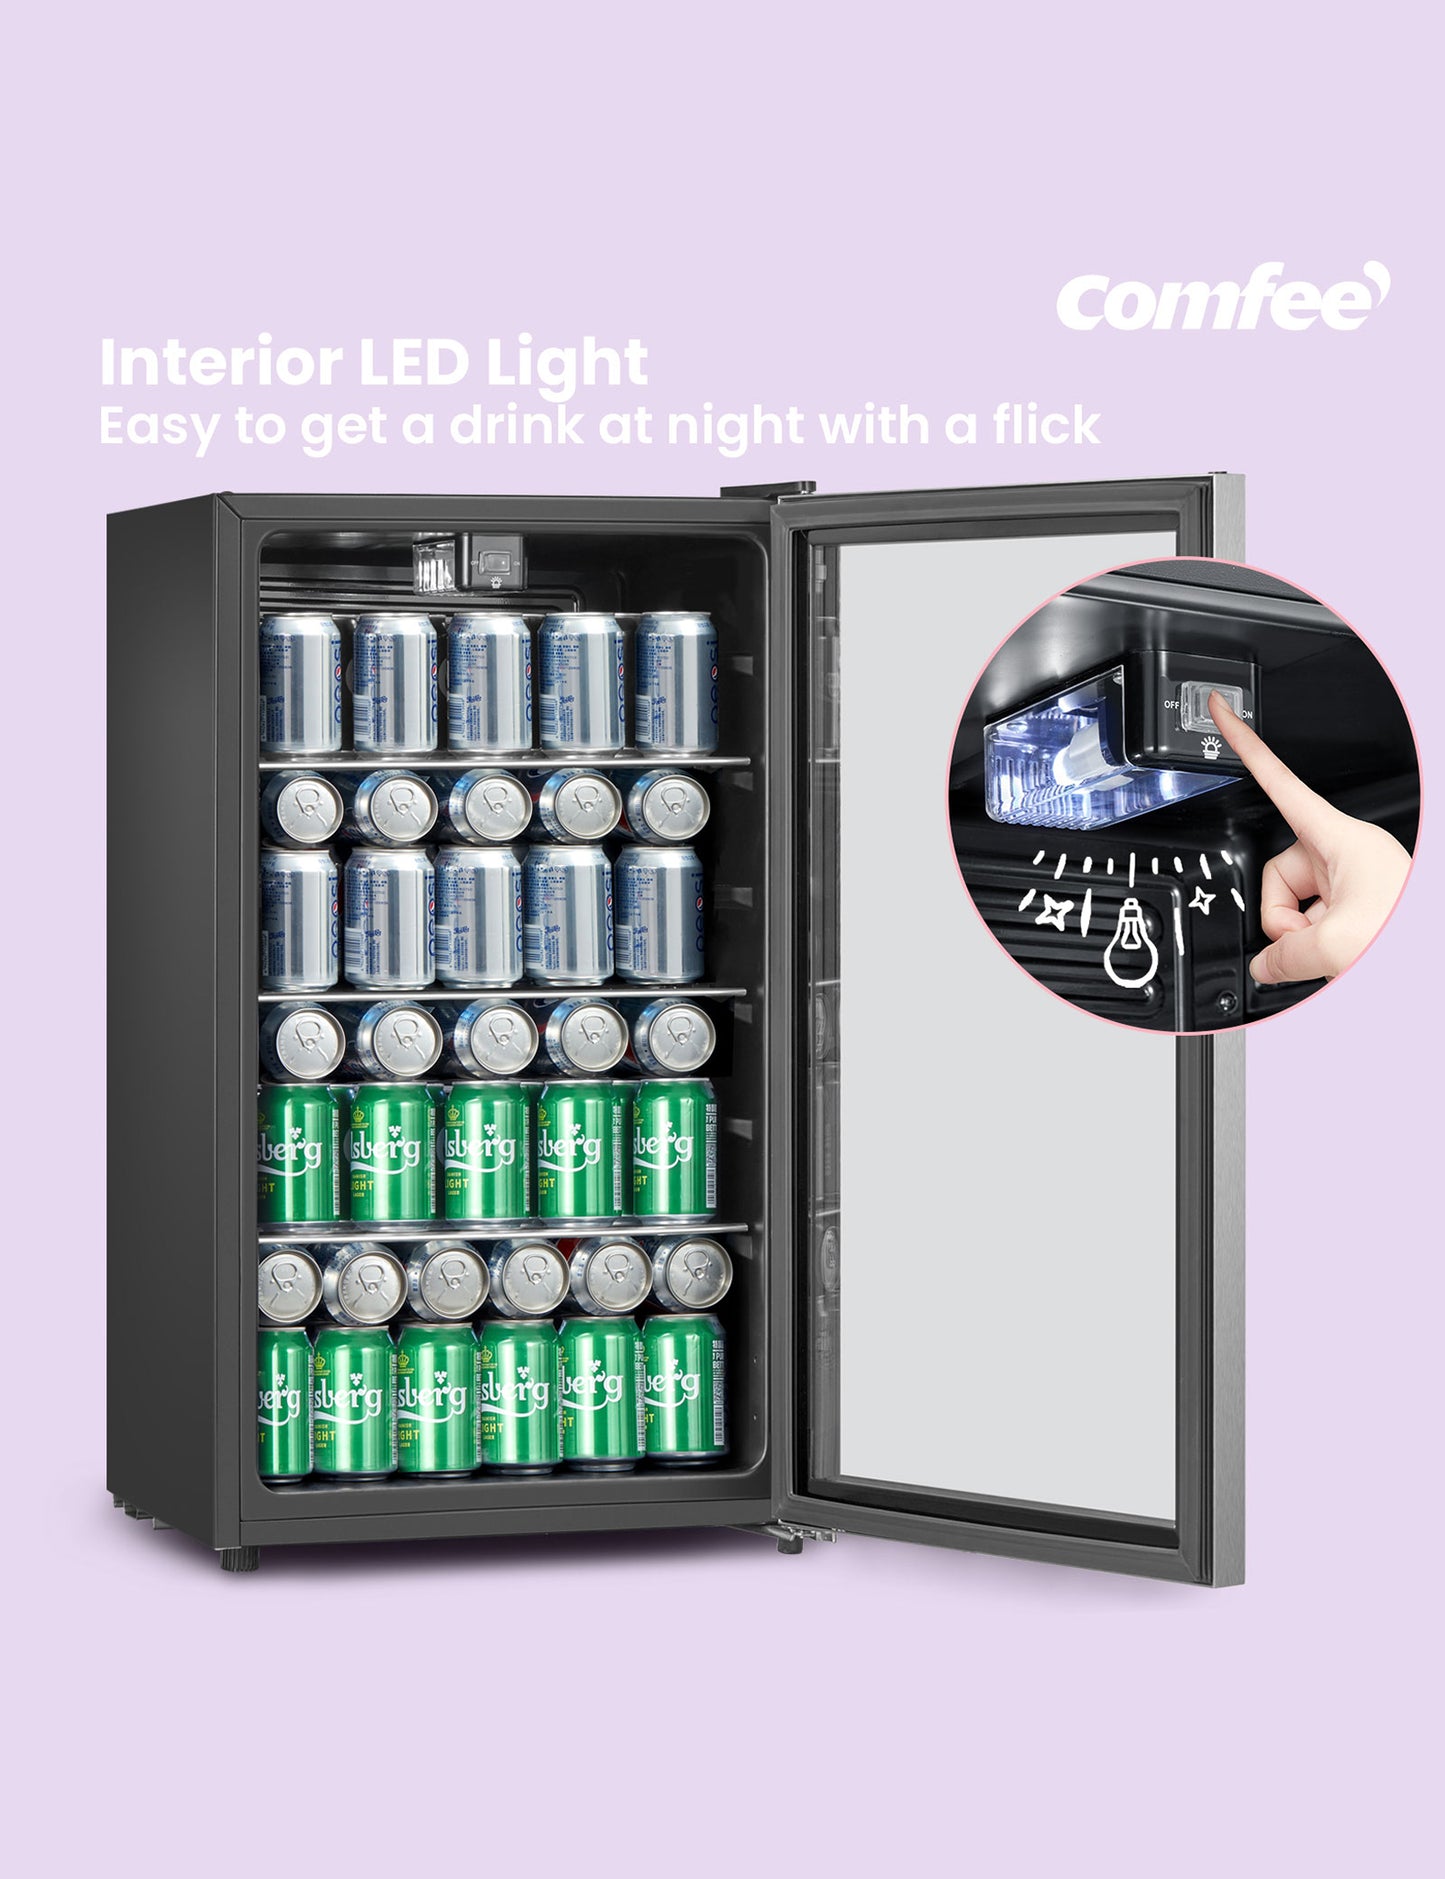 hand pressing internal led light on the comfee beverage drinks cooler